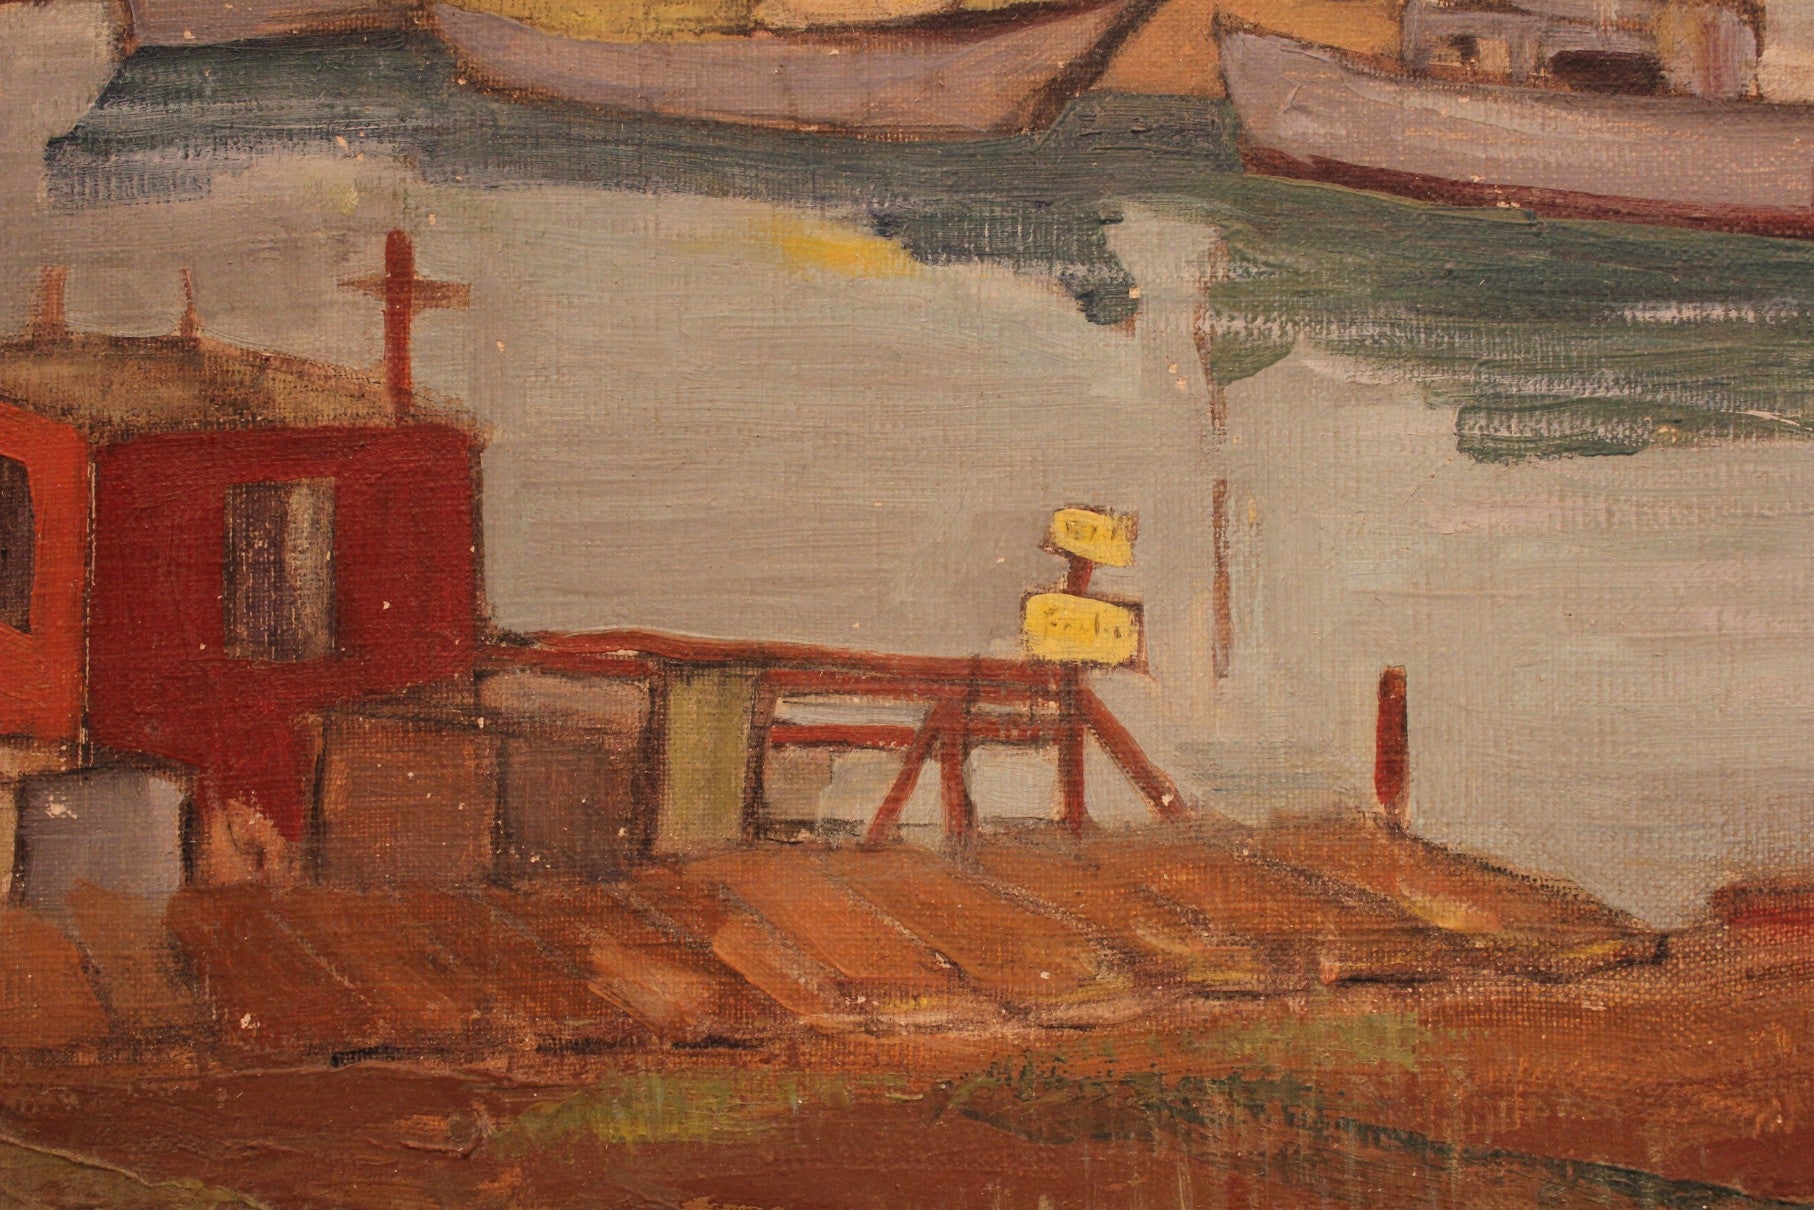 AW055 - American School - Modernist Harbor Scene - Oil on Canvas